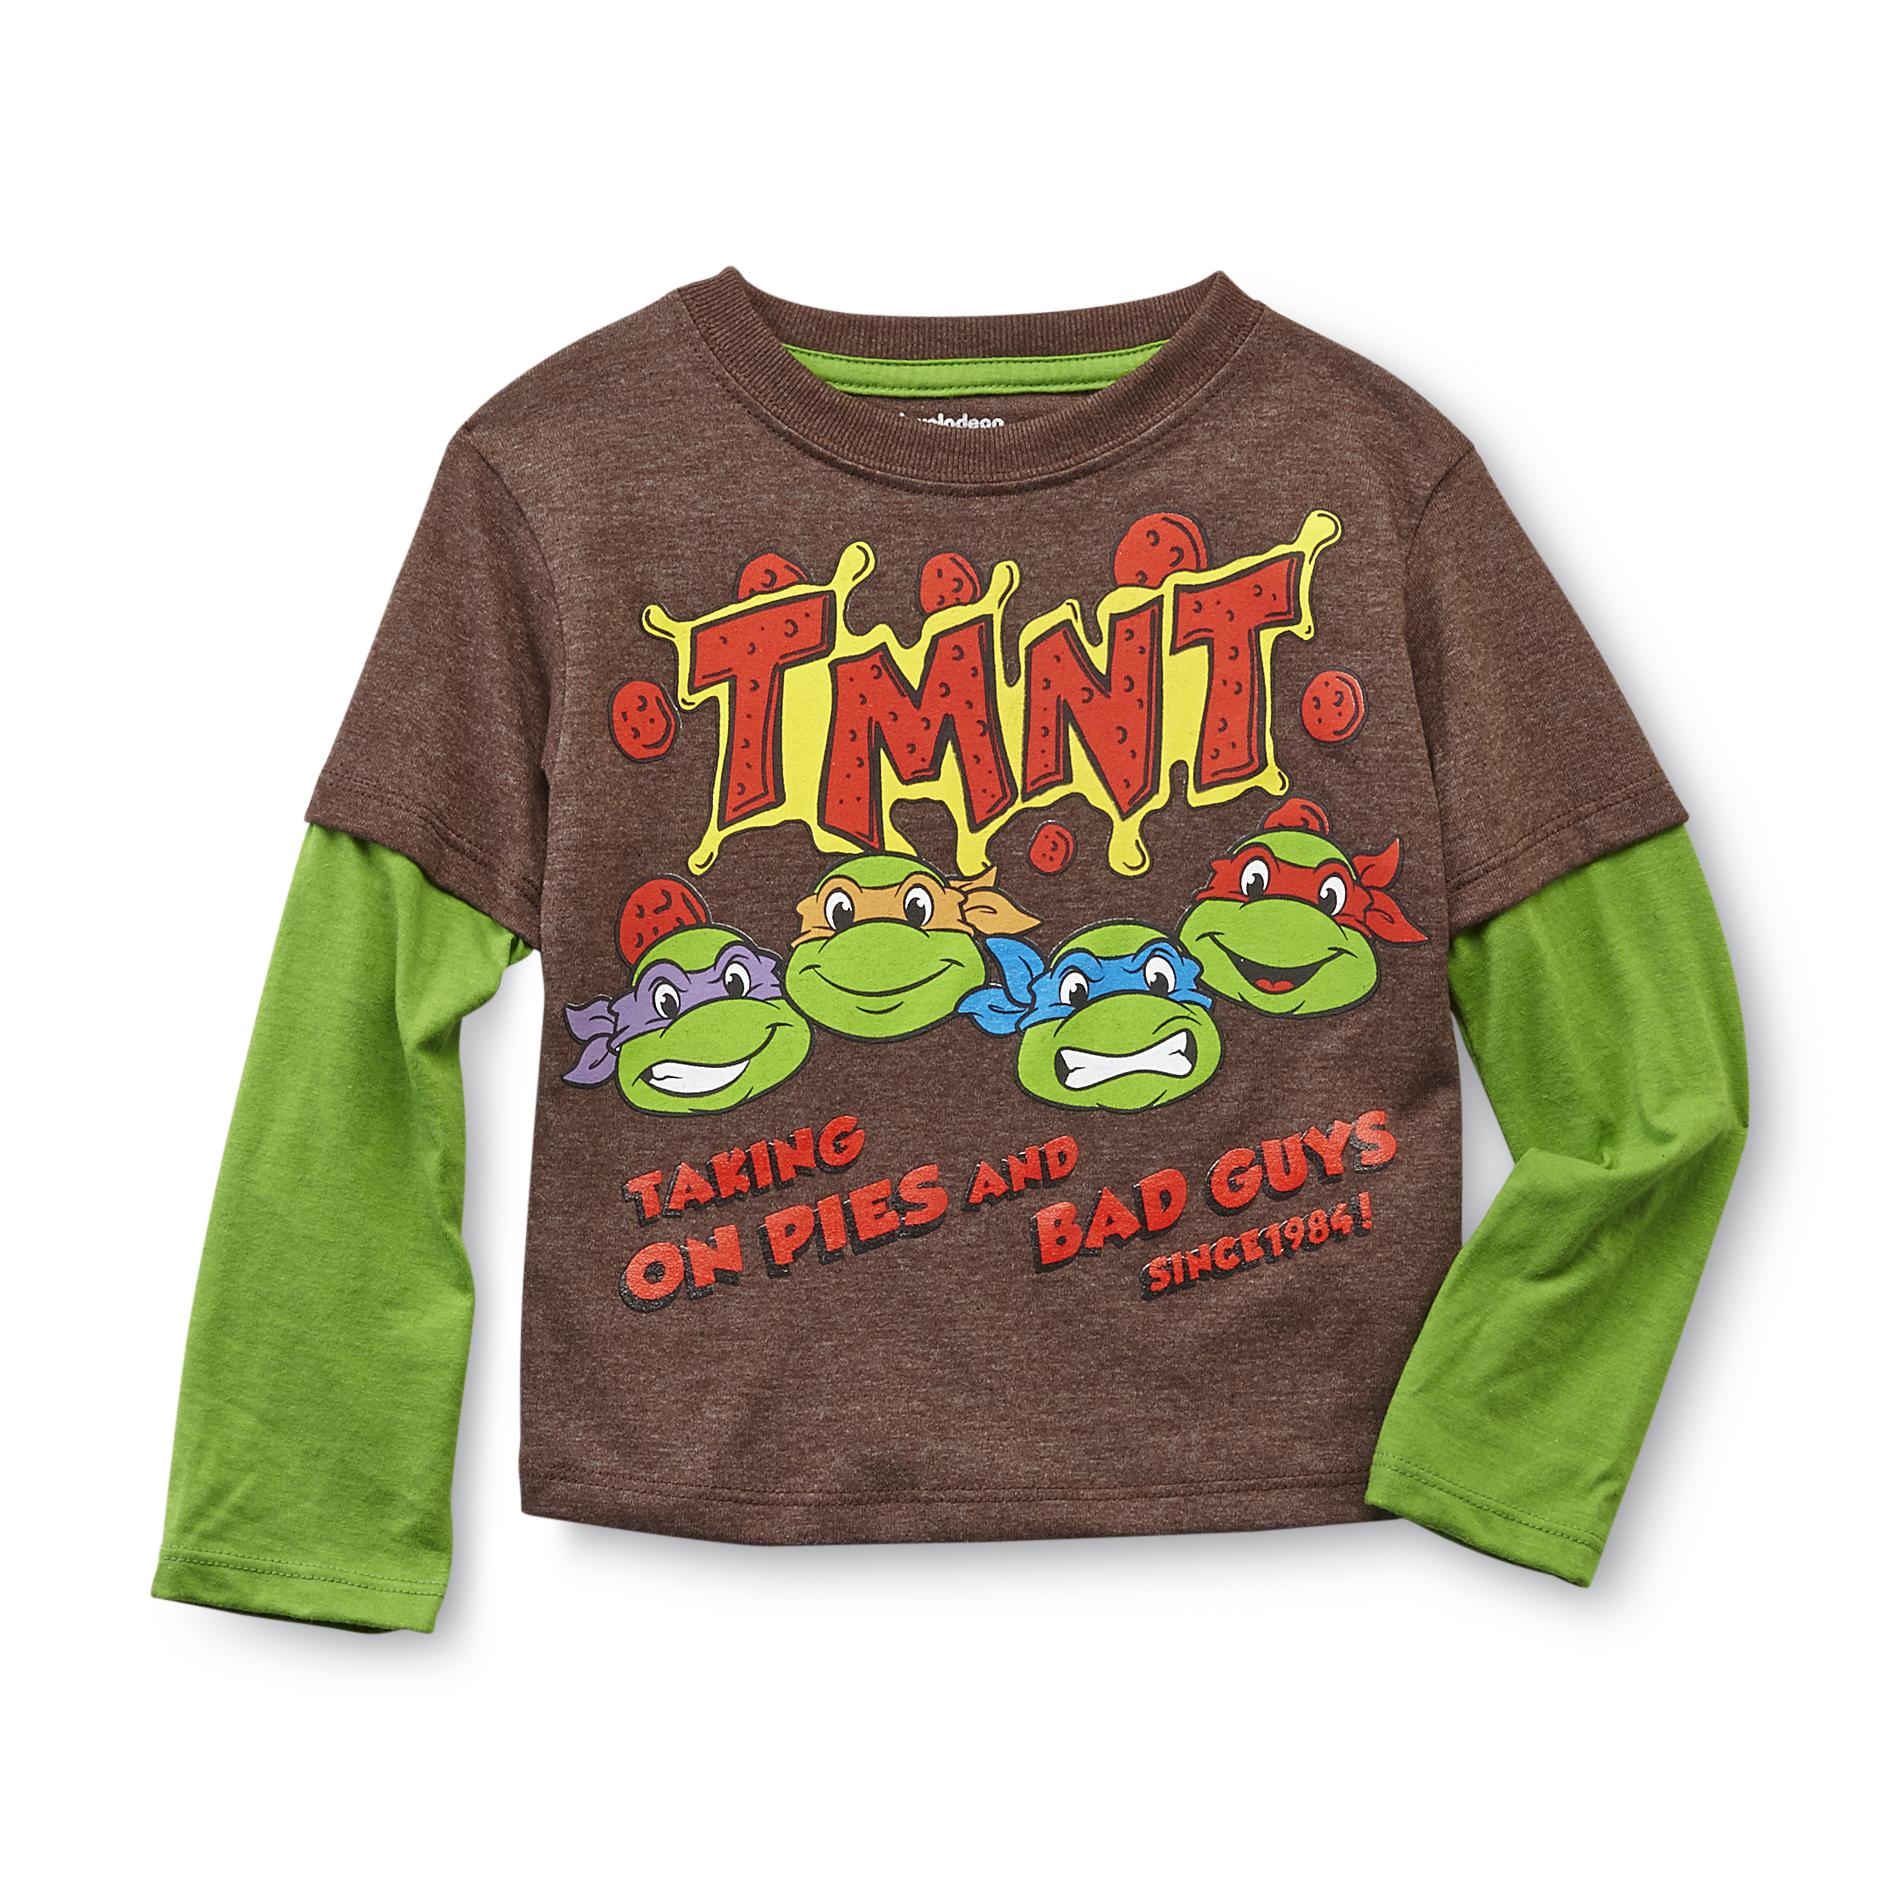 Nickelodeon Teenage Mutant Ninja Turtles Toddler Boy's Shirt